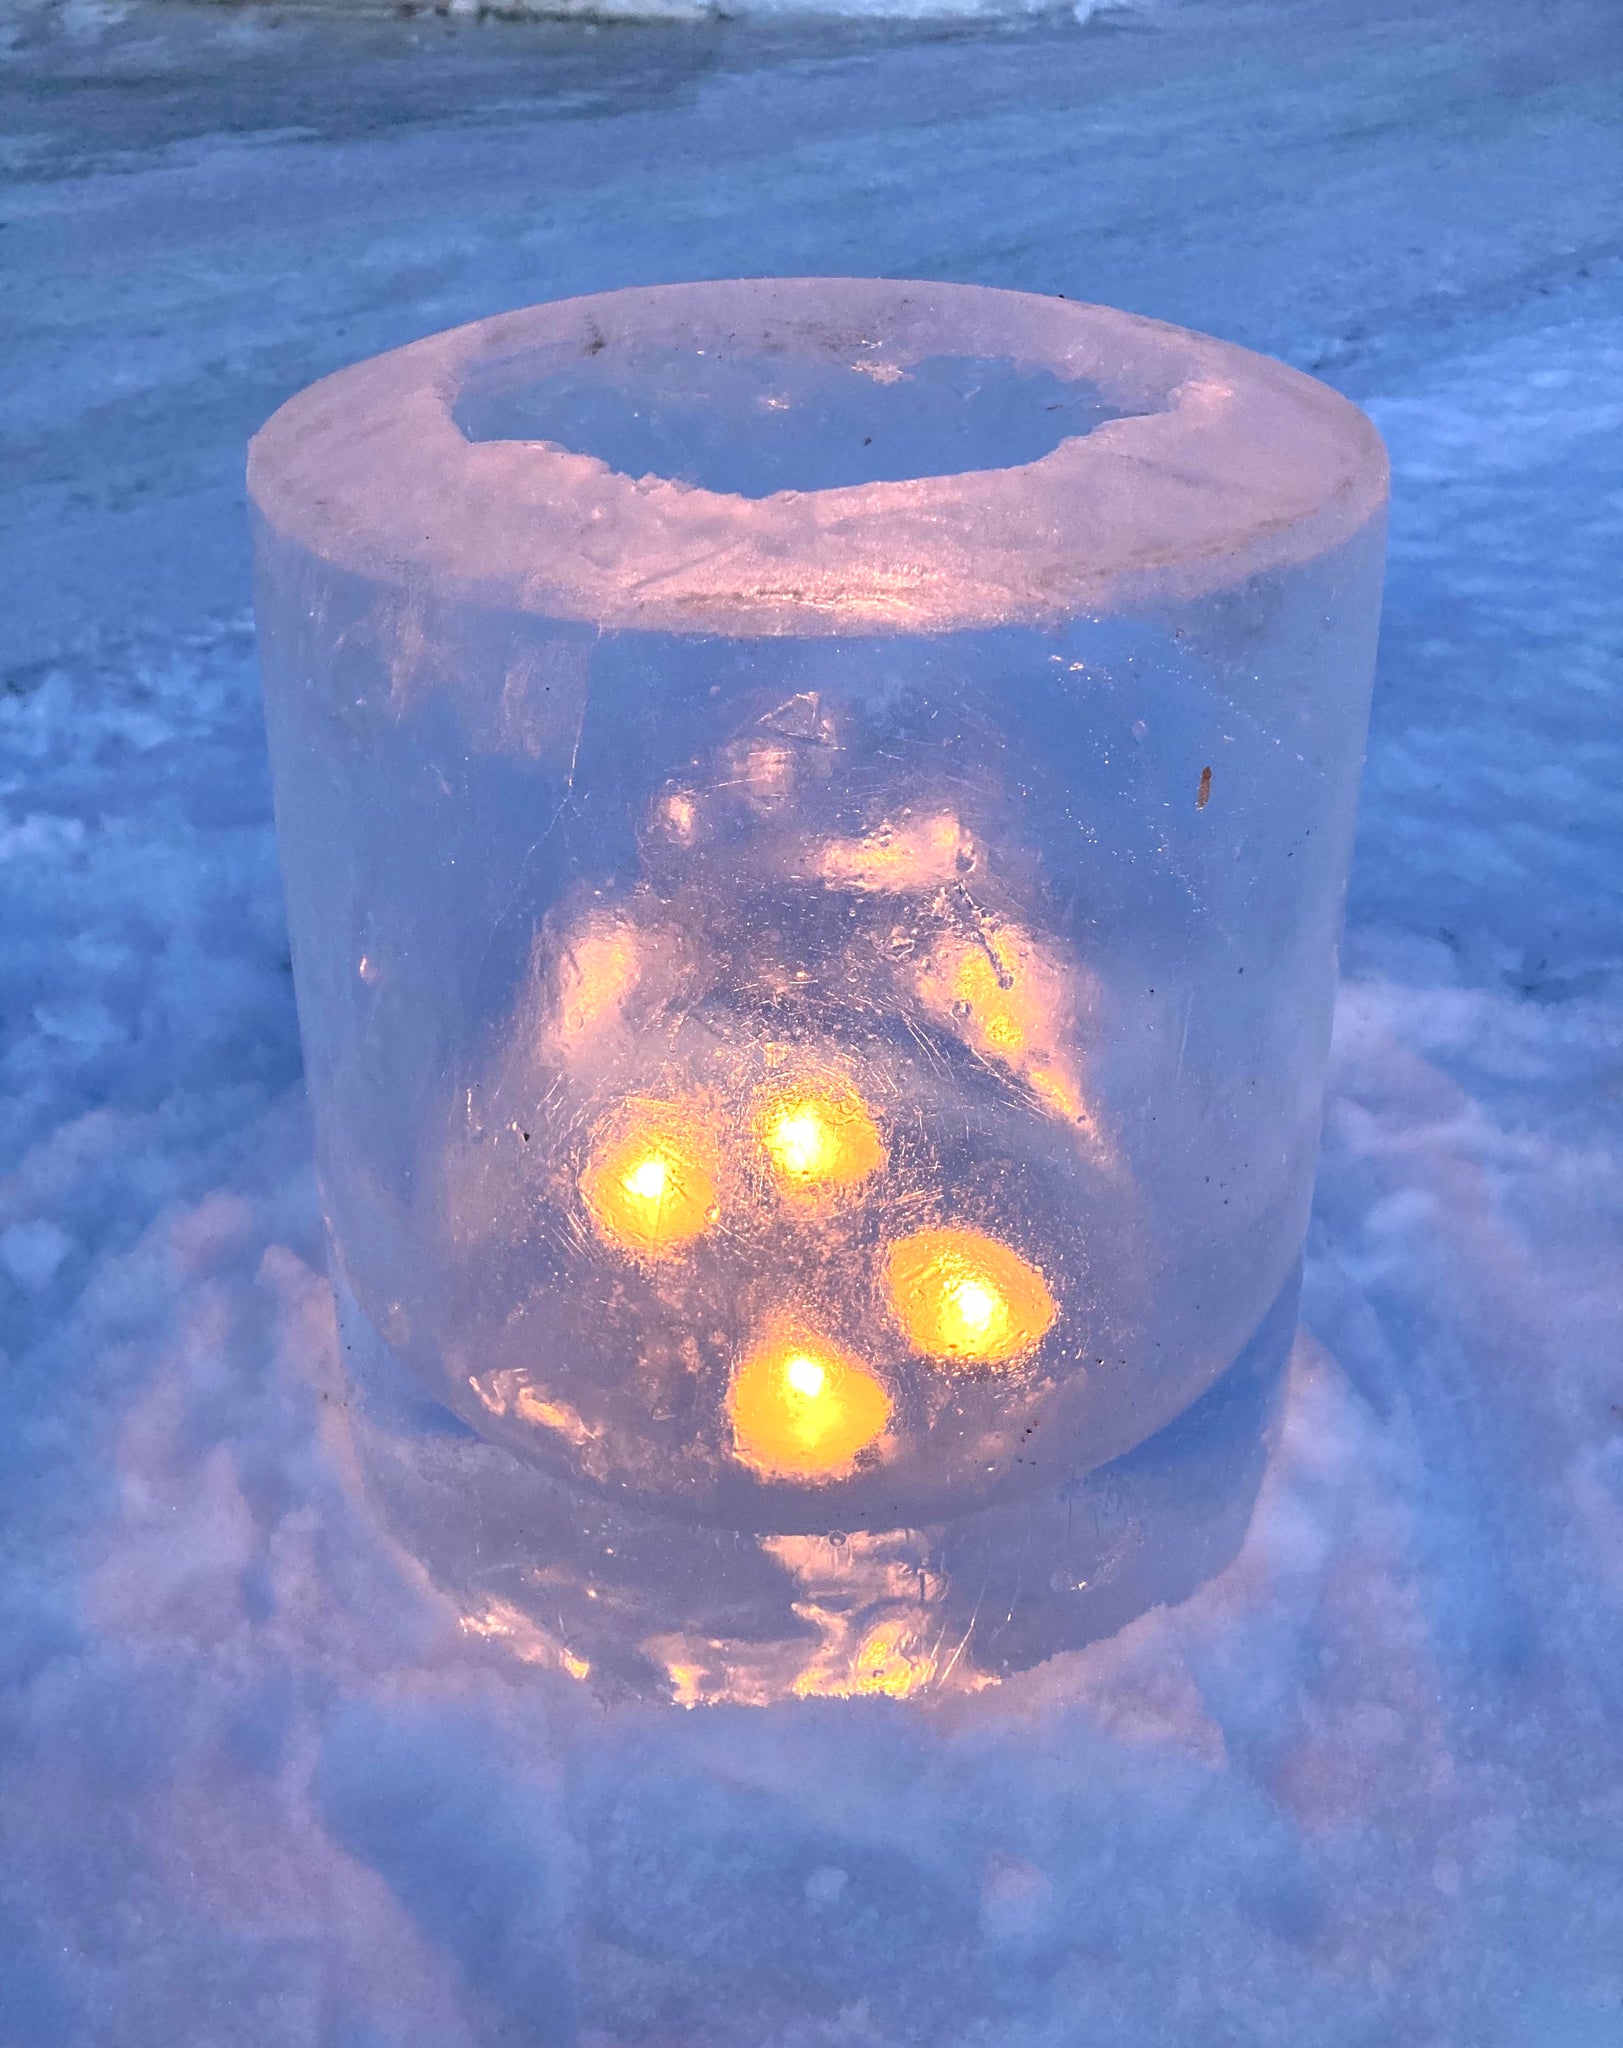 how to make an ice lantern